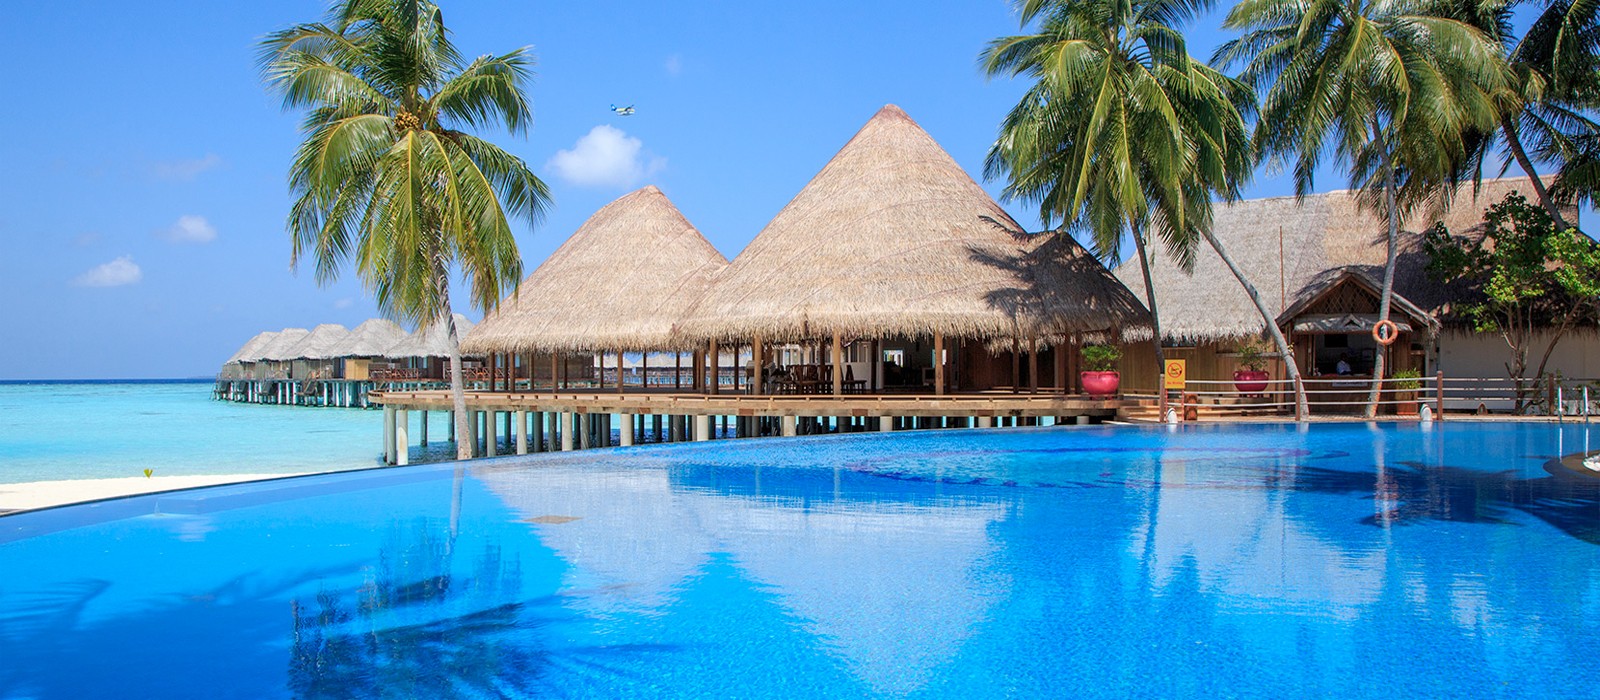 Sun Aqua Vilu Reef - Luxury Maldives holiday Packages - Header